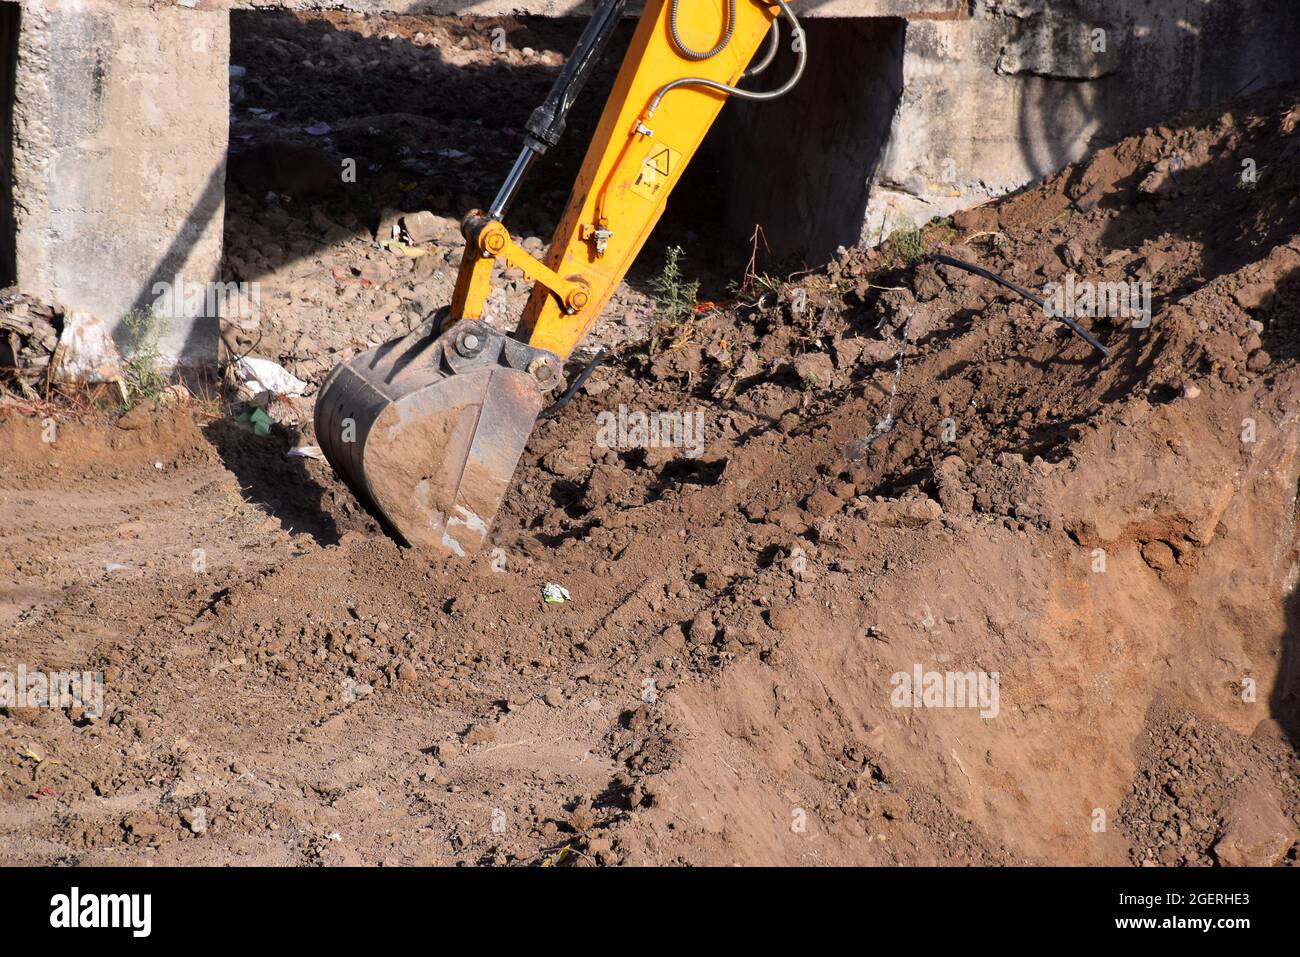 08-05-2020,Bhadapipalya, Madhya Pradesh, India, The modern excavator JCB performs excavation work on the construction site Stock Photo